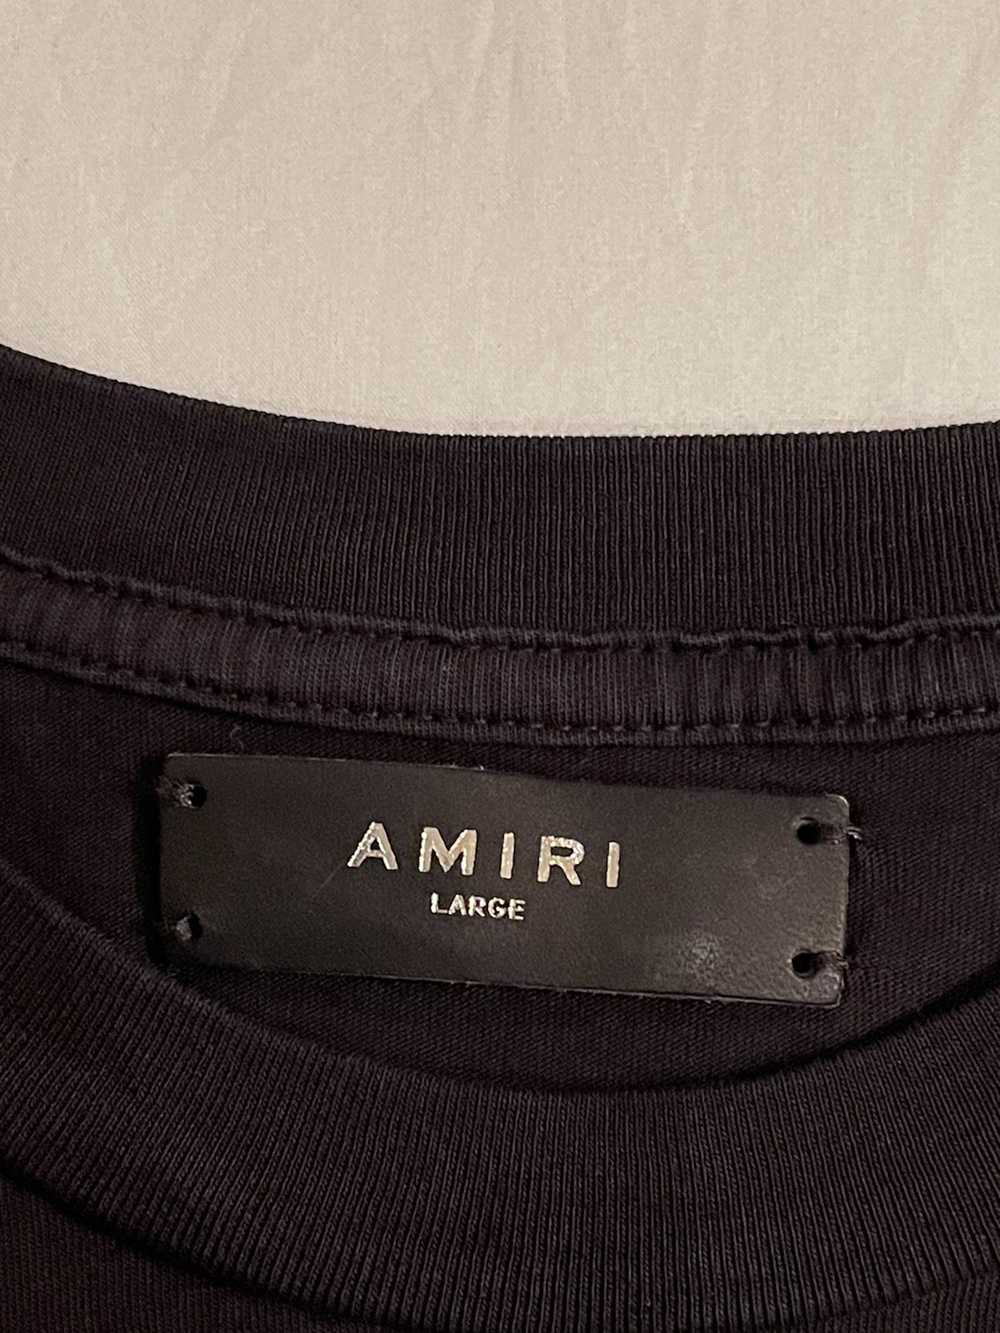 Amiri Amiri ‘College Tee’ black T-Shirt - image 3